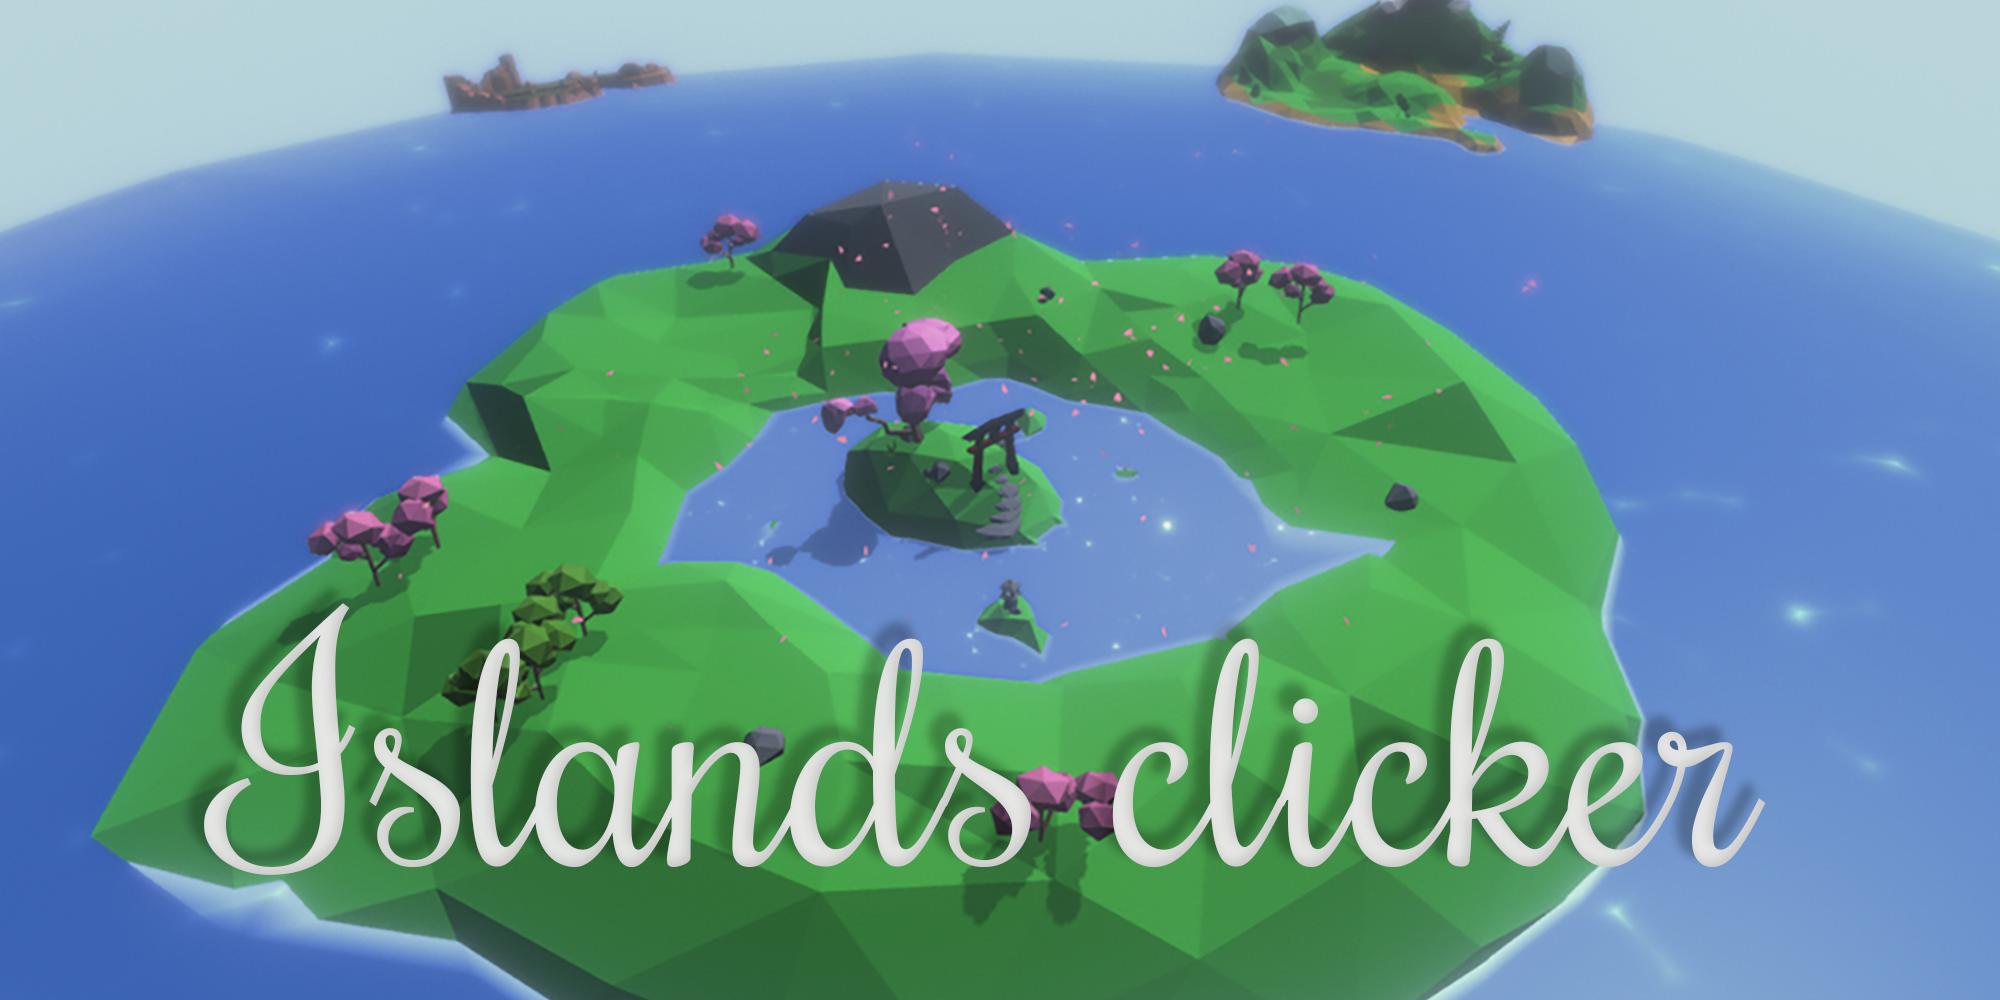 Island версия 2. Игра кликер островов. Кликер остров 3д. Мобильная игра Clicker Island. Игра кликер остров в небе.